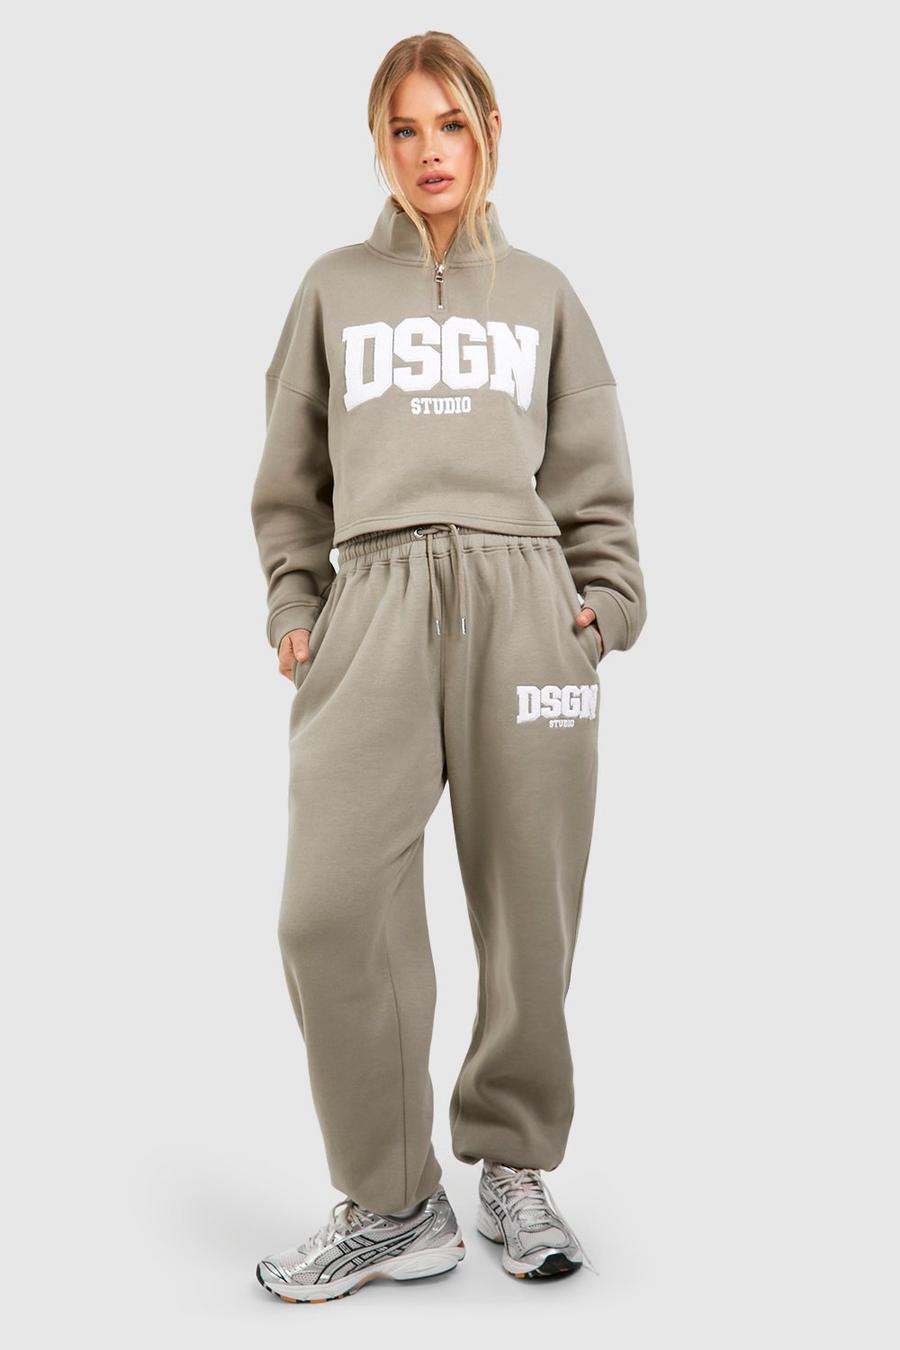 Sweatshirt-Trainingsanzug mit Dsgn Studio Frottee-Applikation, Washed khaki image number 1